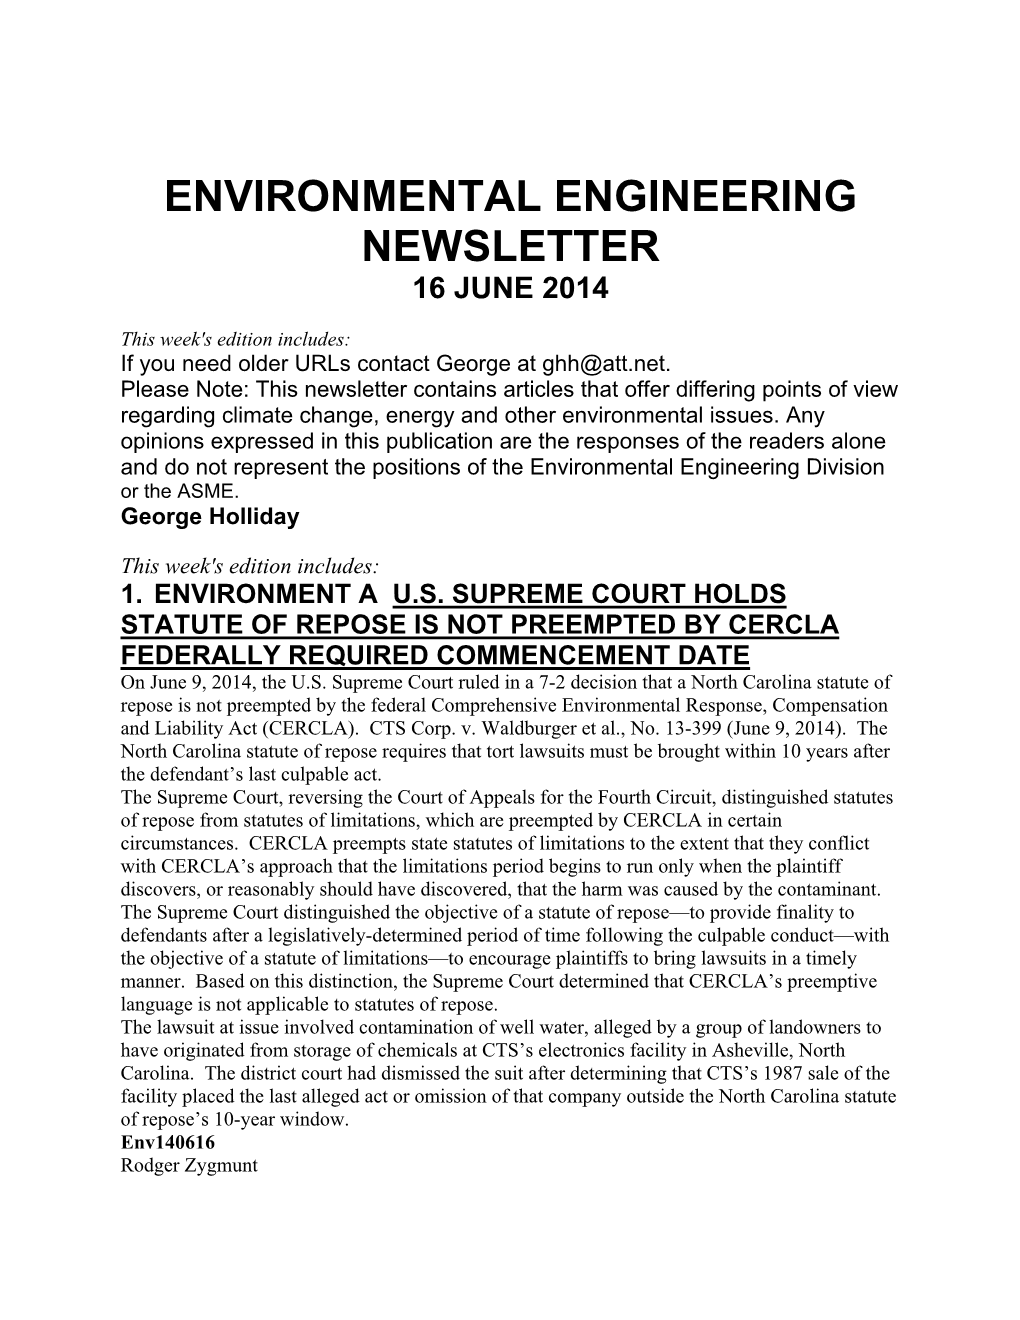 Environmental Engineering Newsletter 16 June 2014